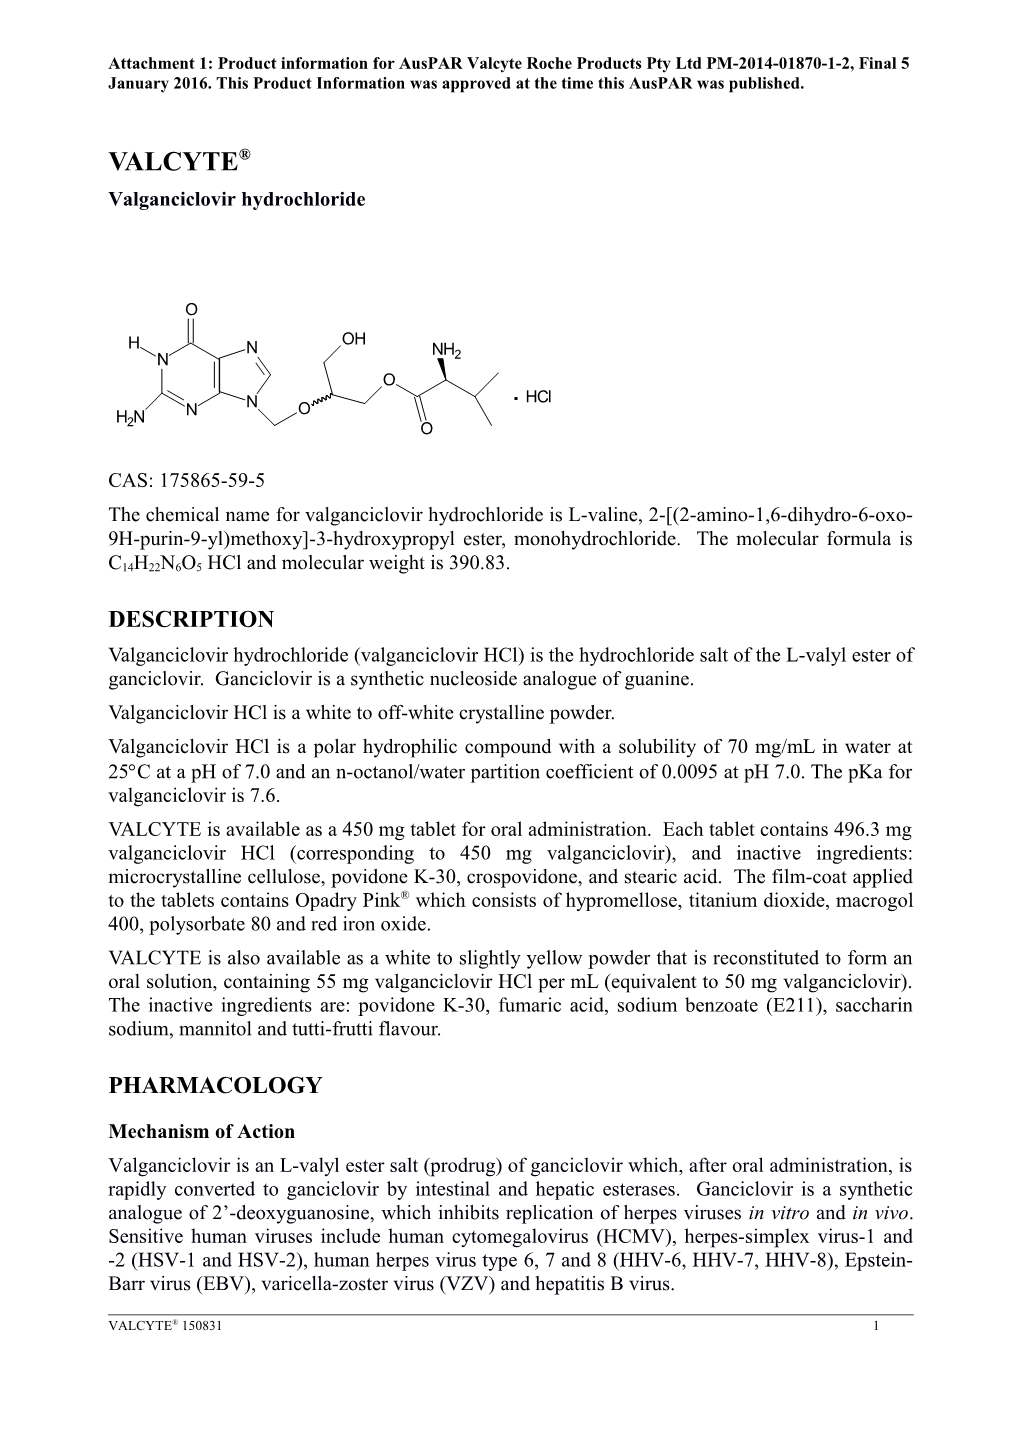 Auspar Attachment 1: Product Information for Valganciclovir